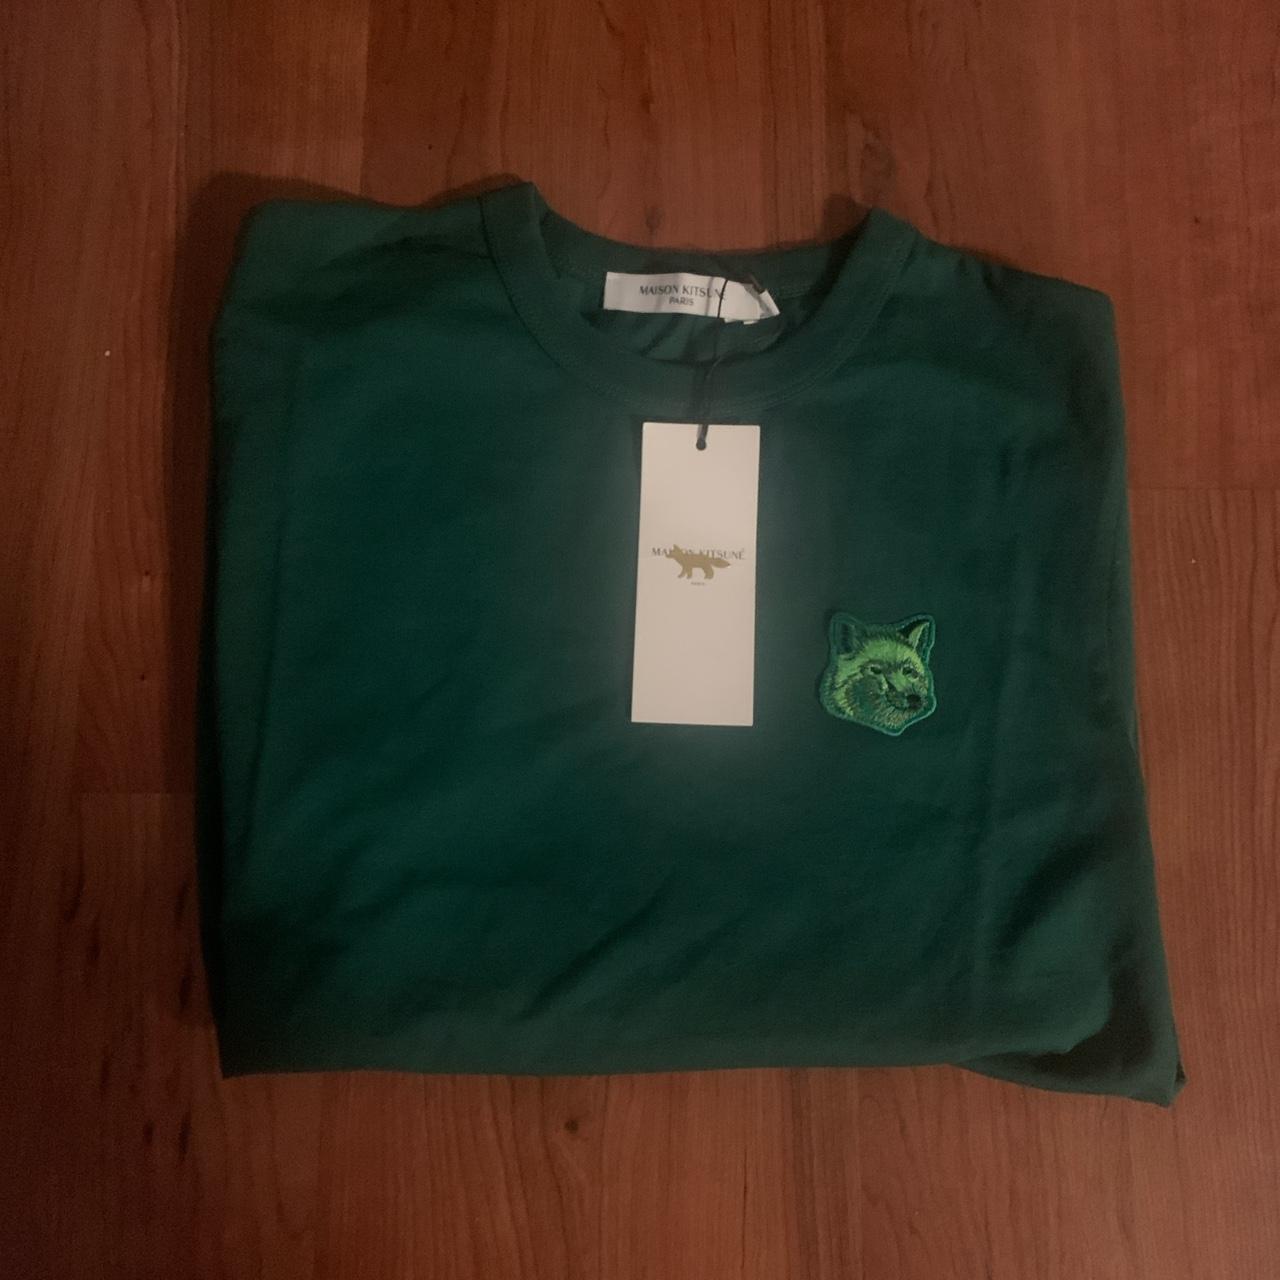 Product Image 1 - Green Maison Kitsune Paris T-shirt

New